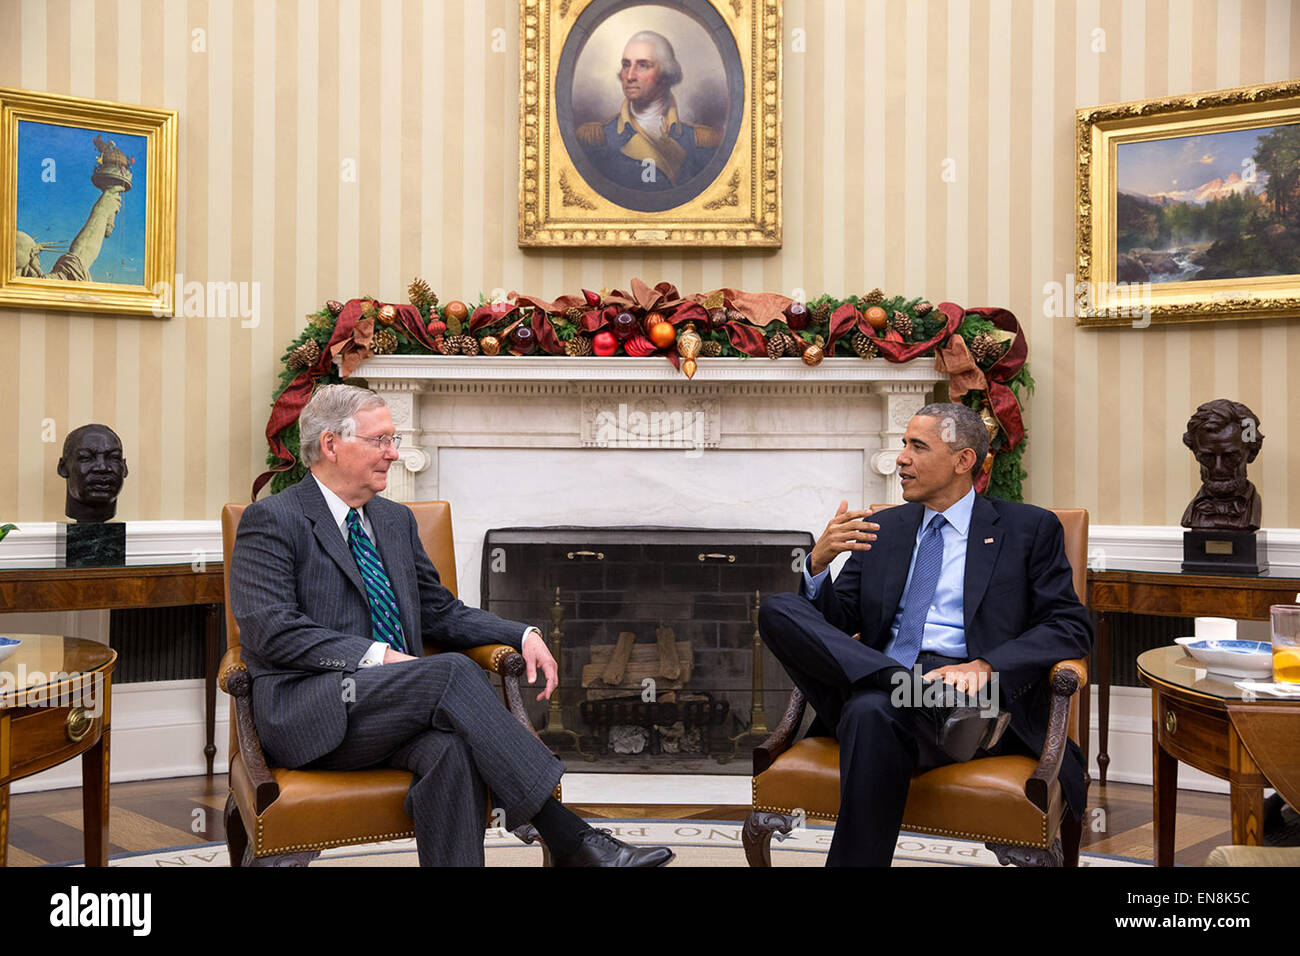 Präsident Barack Obama trifft sich mit Senat Minderheitenführer Mitch McConnell, R -KY im Oval Office, 3. Dezember 2014. Stockfoto